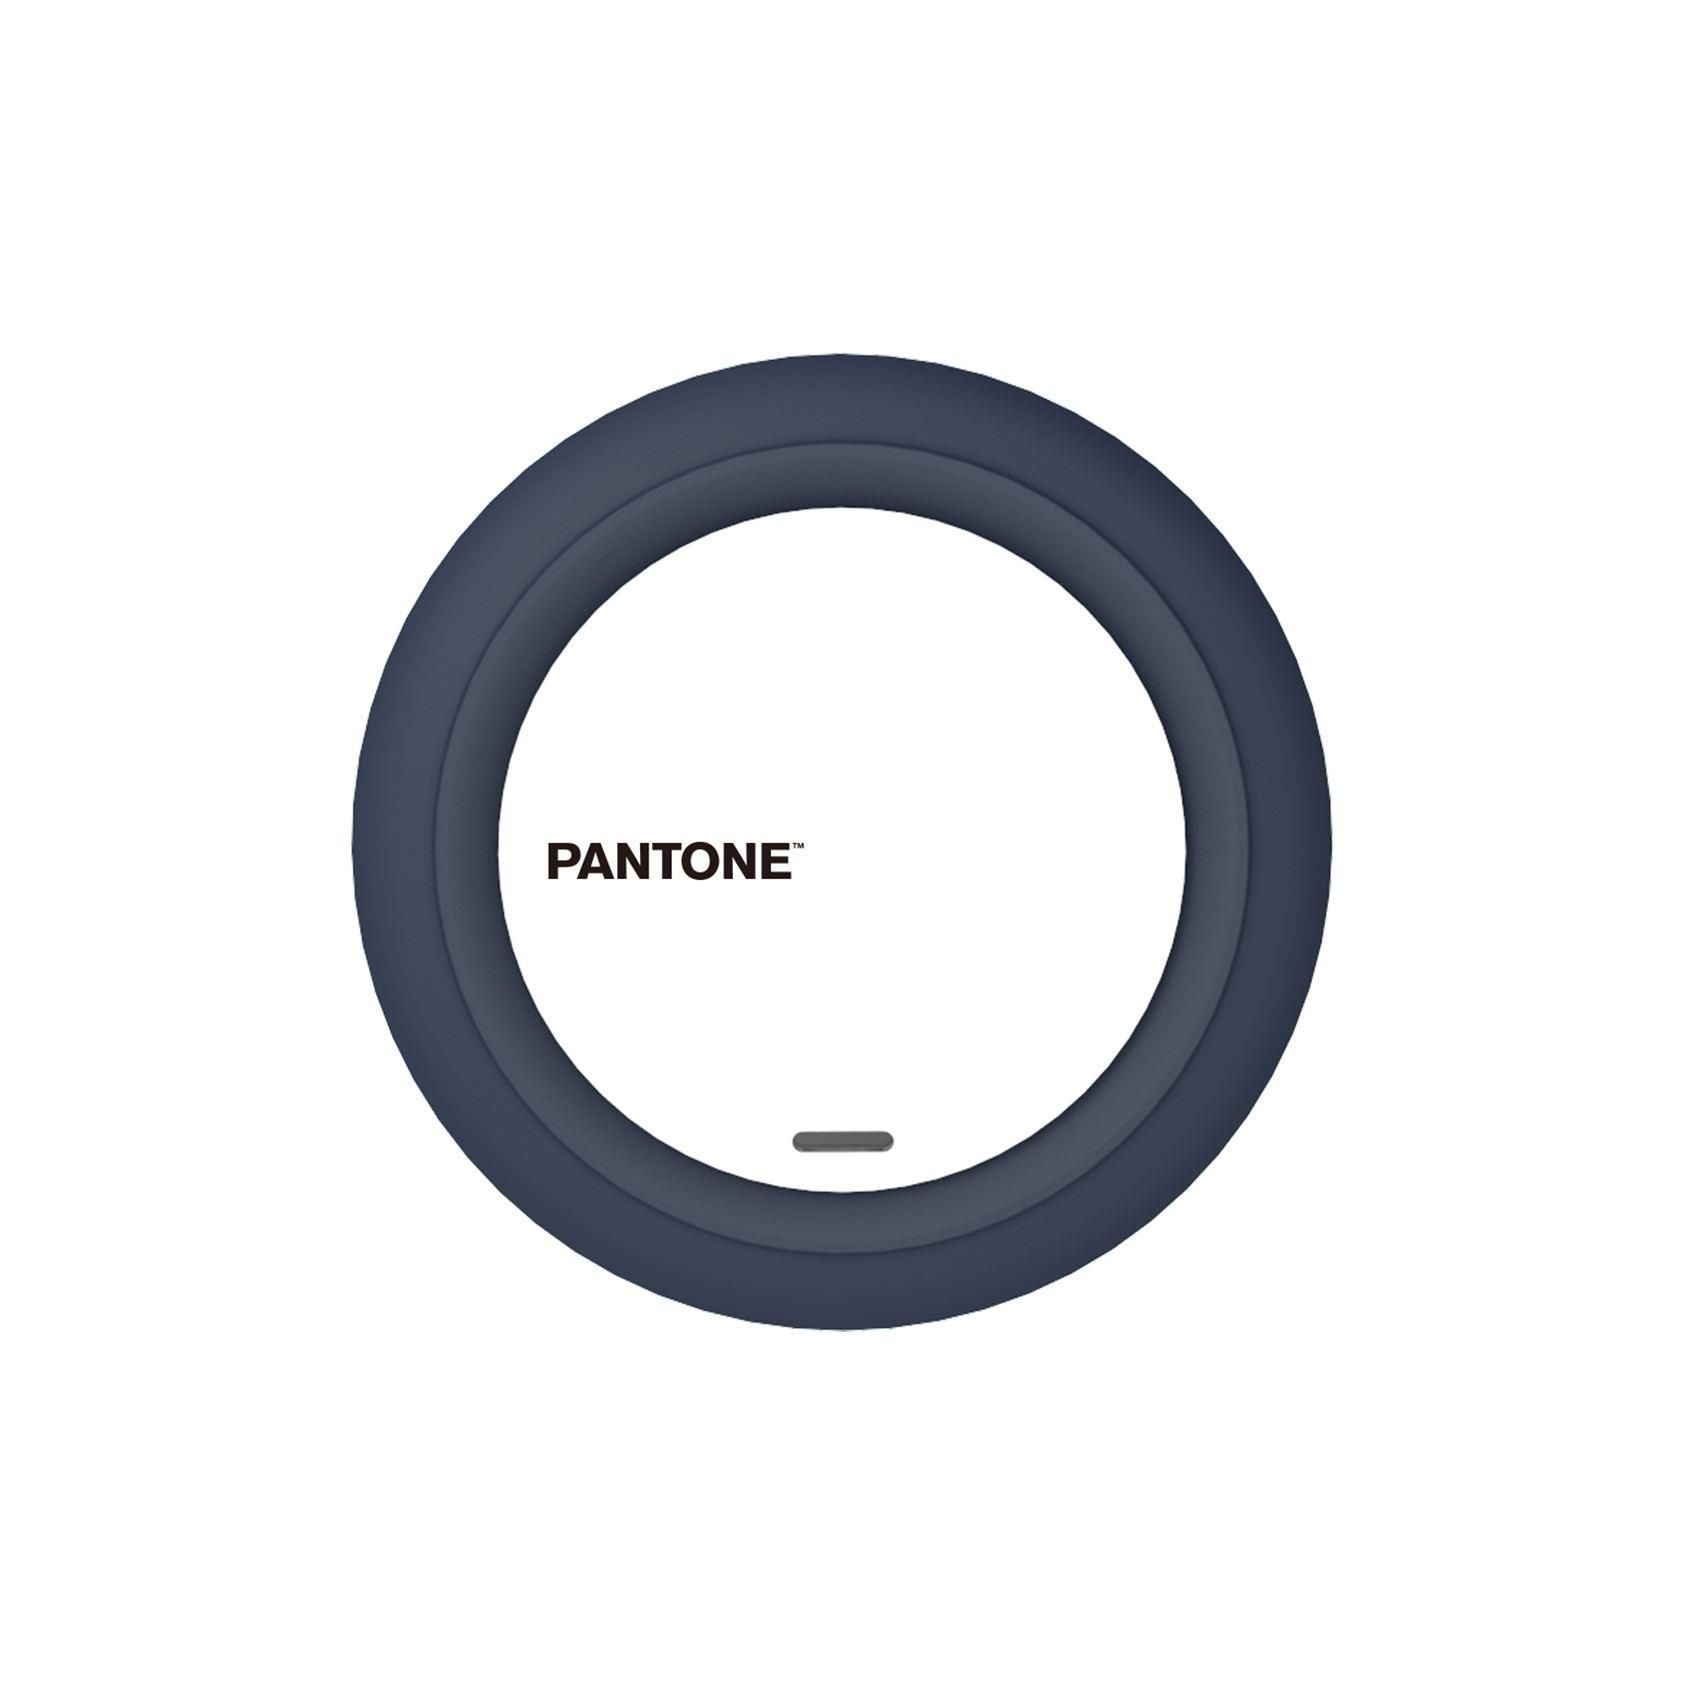 Pantone QI Wireless Charger